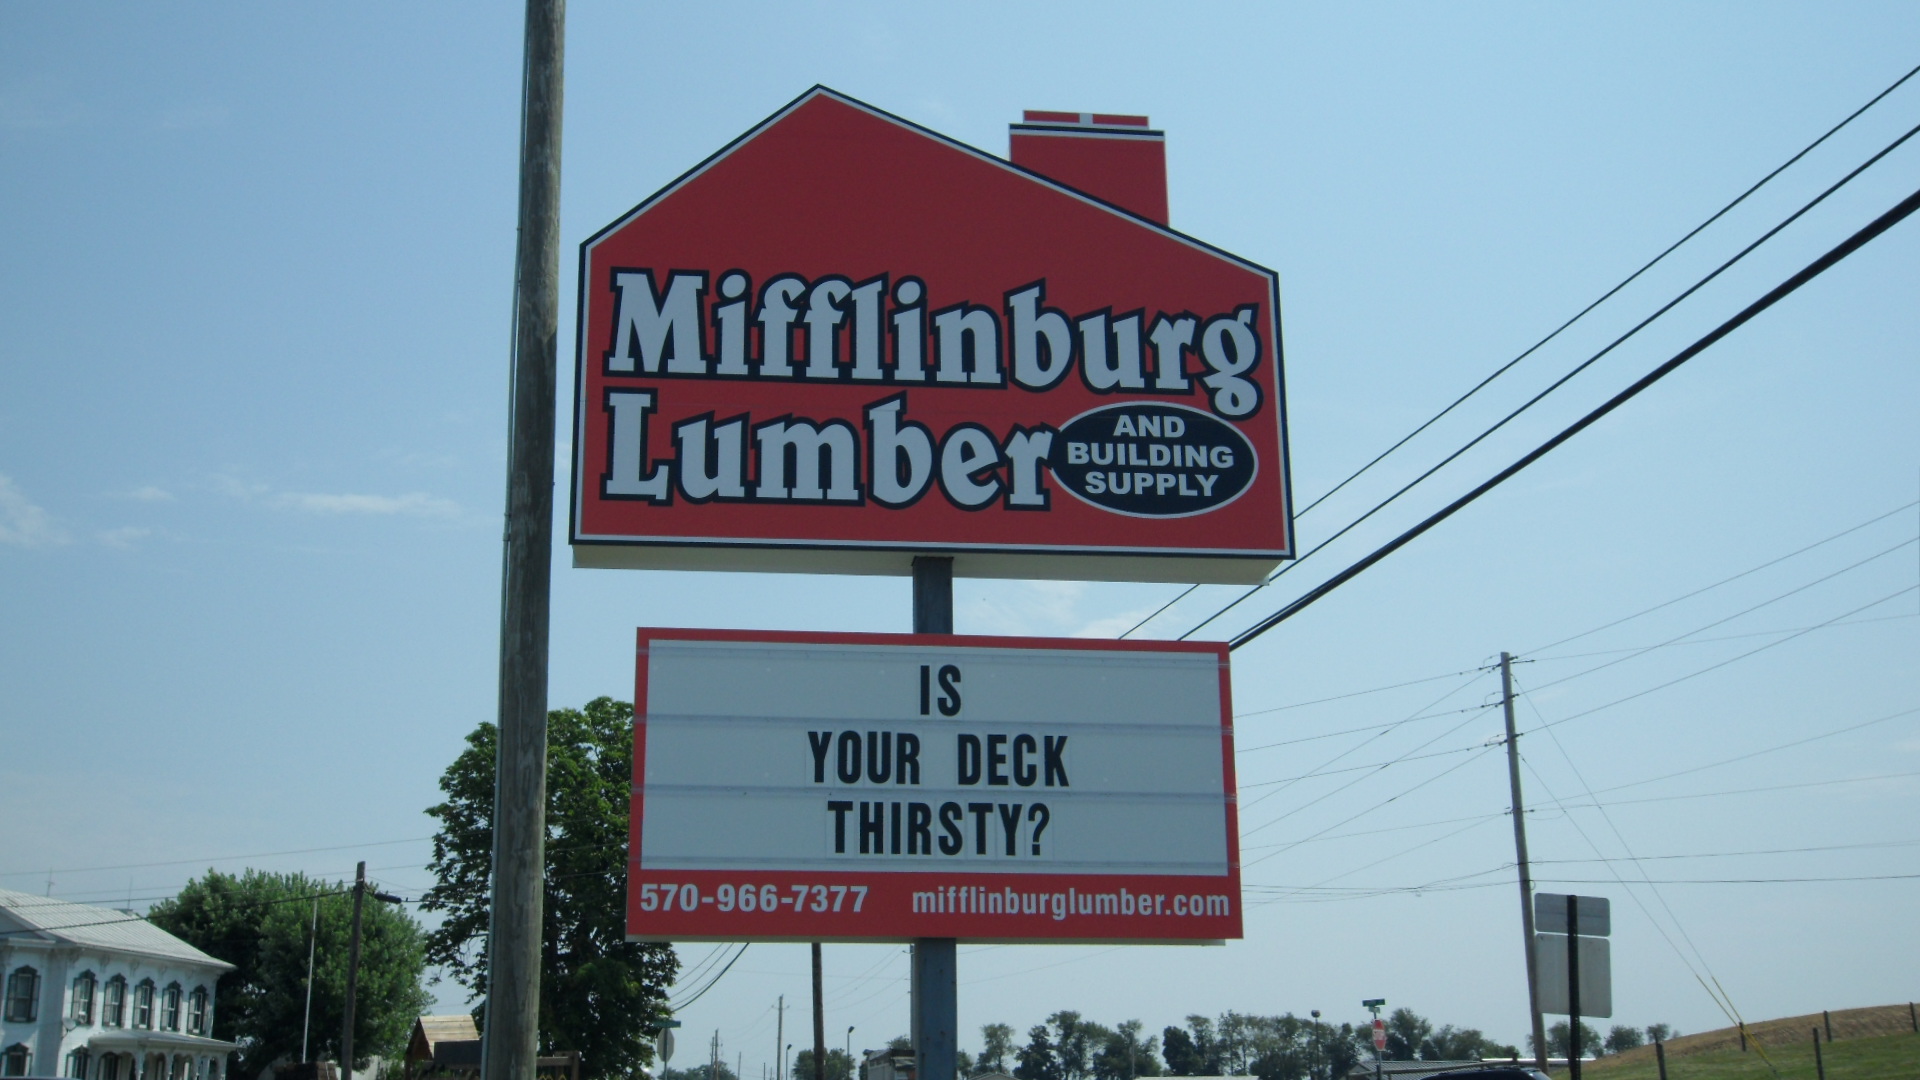 Mifflinburg Lumber sign along Route 45 near Mifflinburg, PA